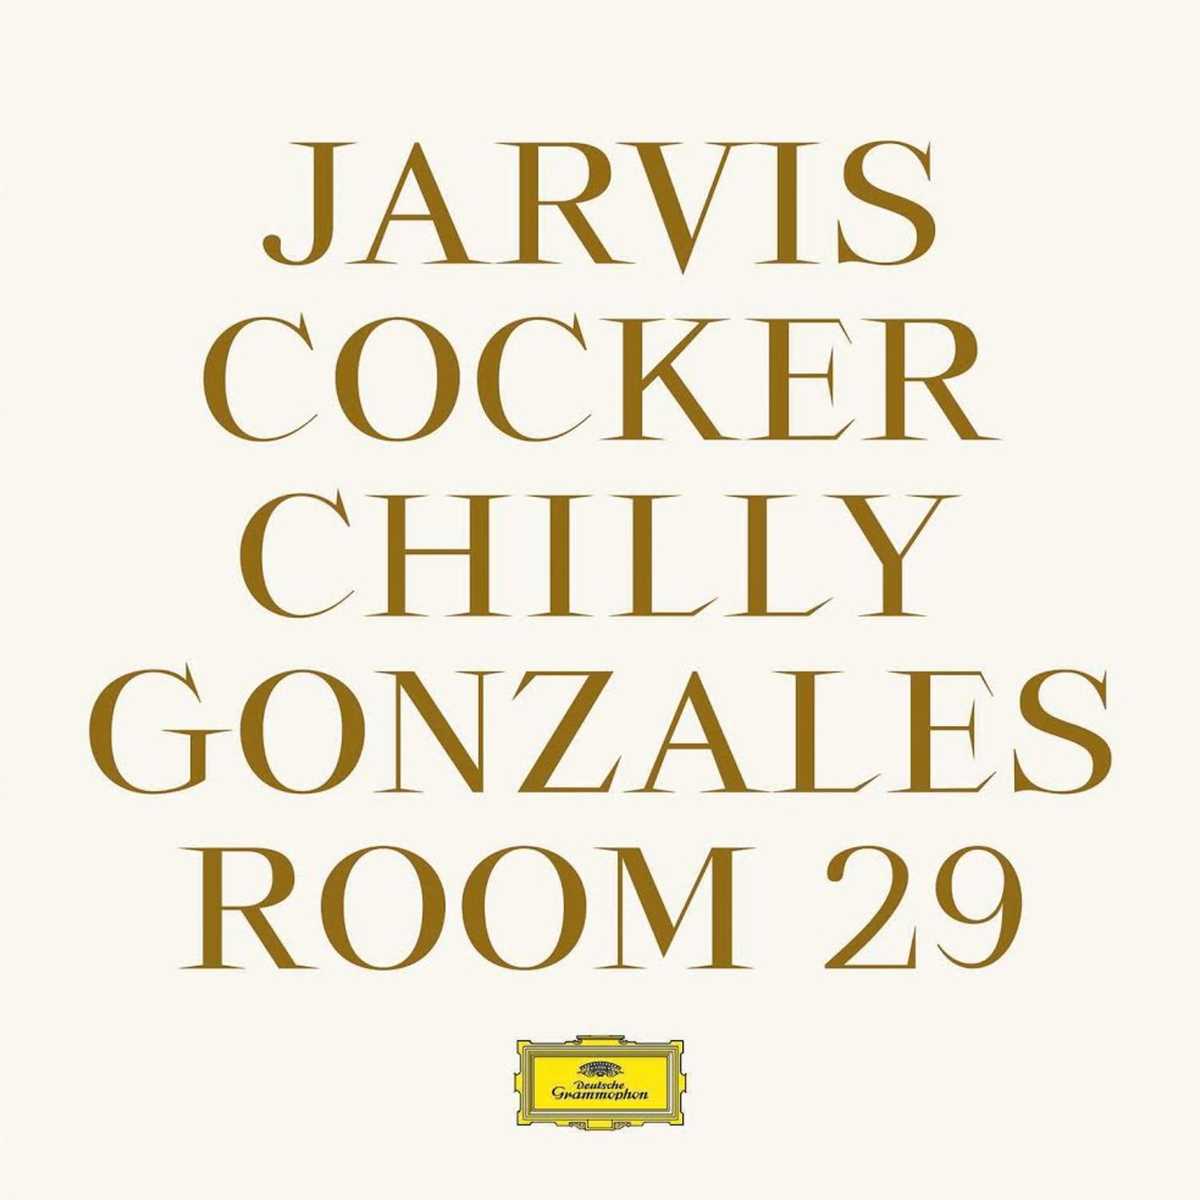 jarvis-cocker-chilly-gonzalez-room-29